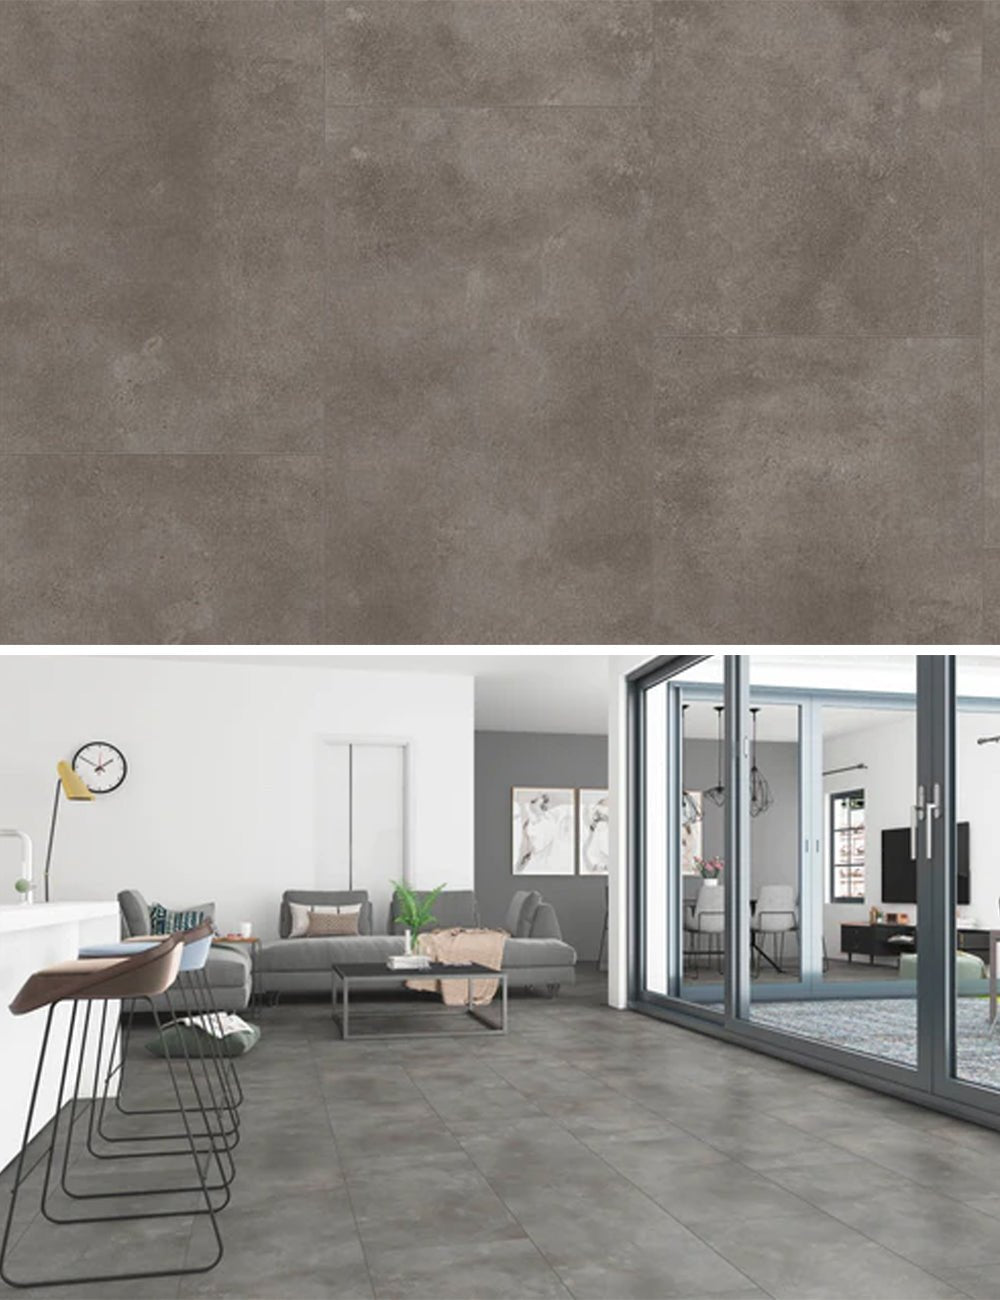 Gelasta Grande Rigid Click Tile 5502 Concrete Grey - Solza.nl